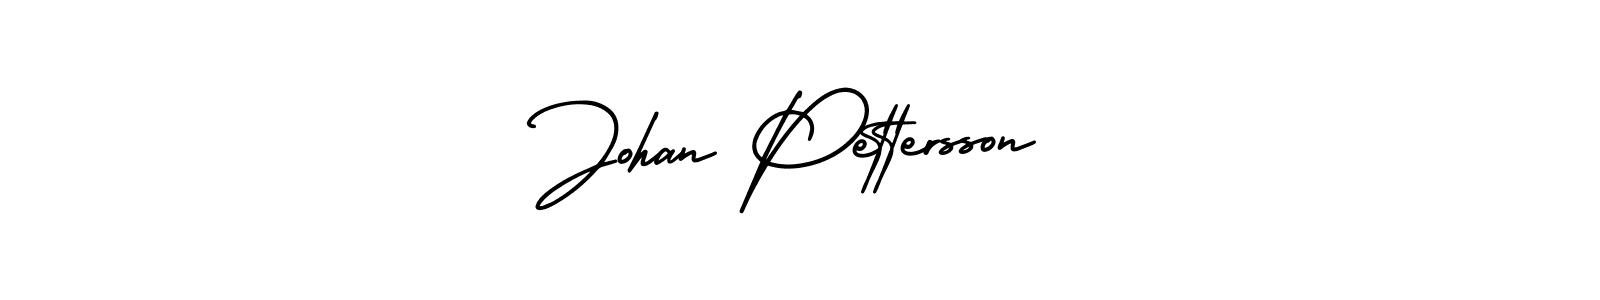 97+ Johan Pettersson Name Signature Style Ideas | Awesome Digital Signature